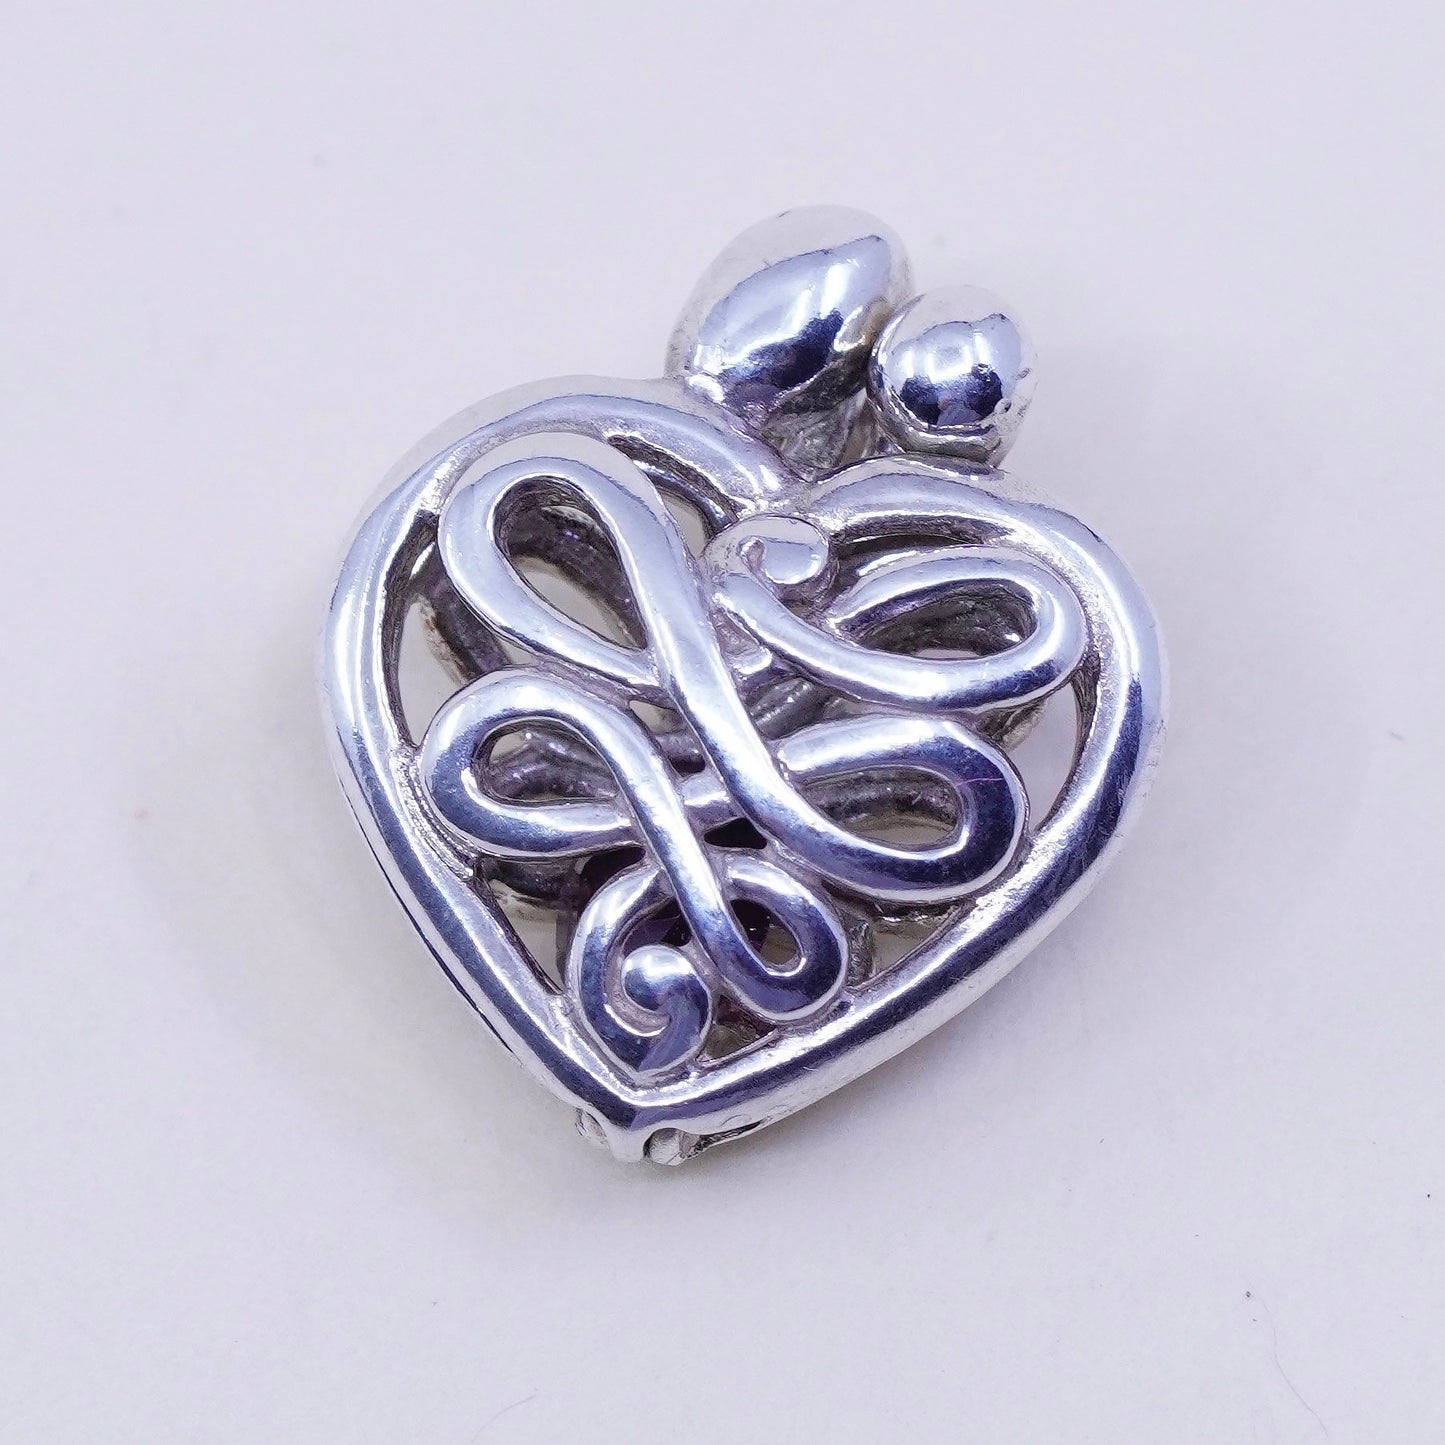 Vintage sterling silver heart filigree charm pendant, 925 prayer locket